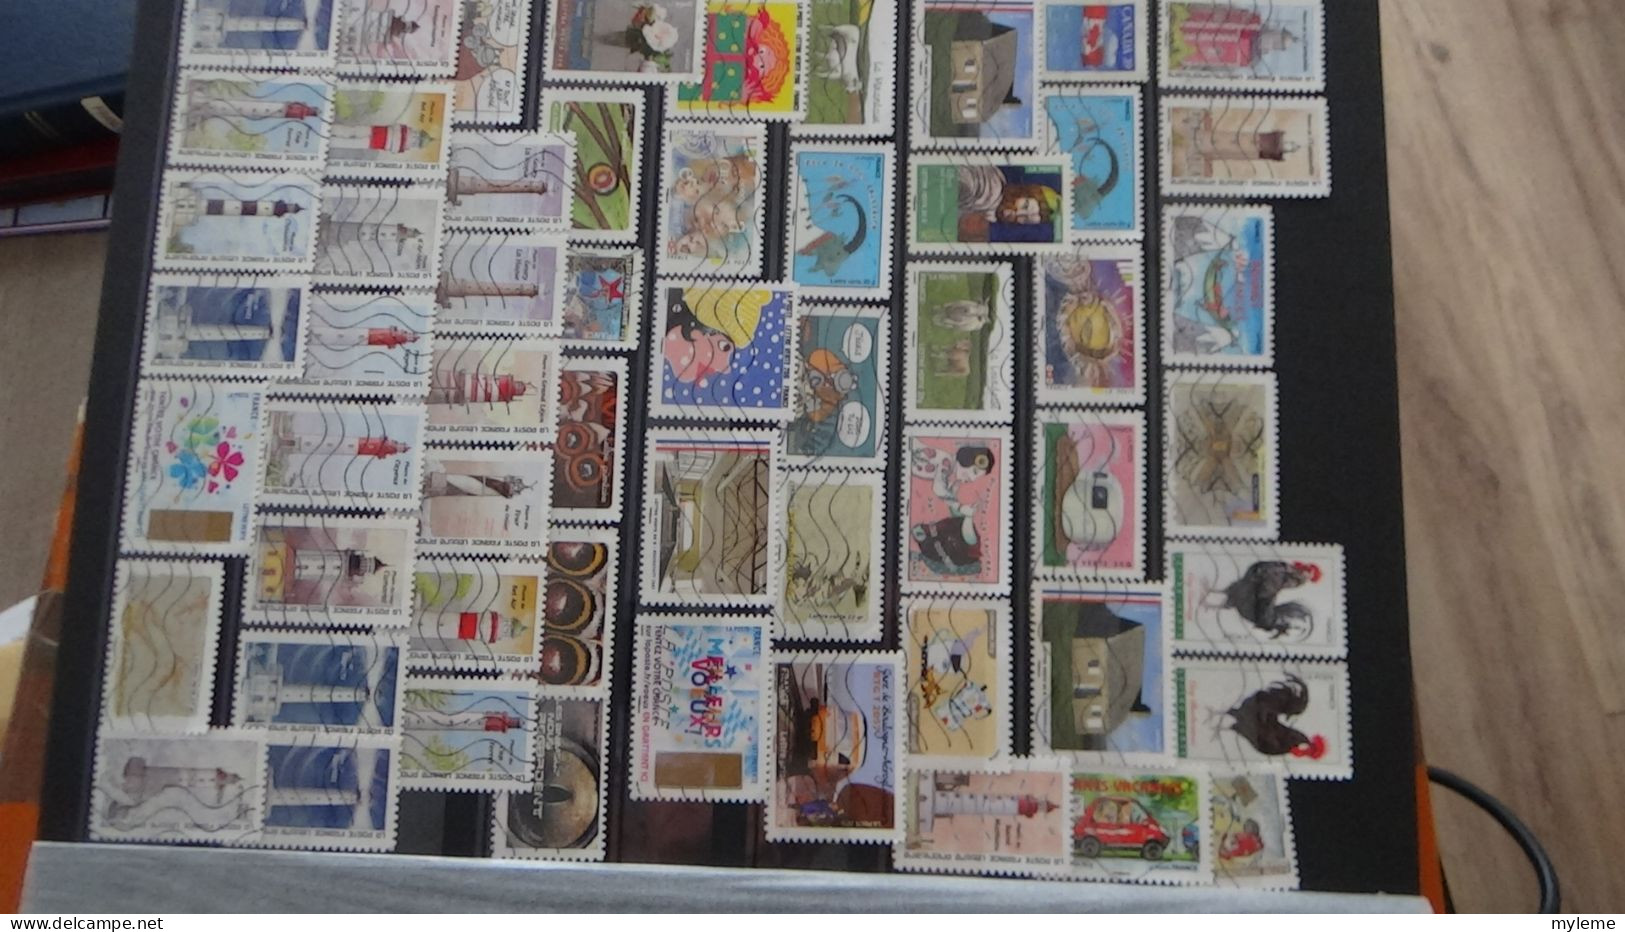 AZ104 Bel ensemble de timbres autoadhésifs oblitérés de France.  A saisir !!!